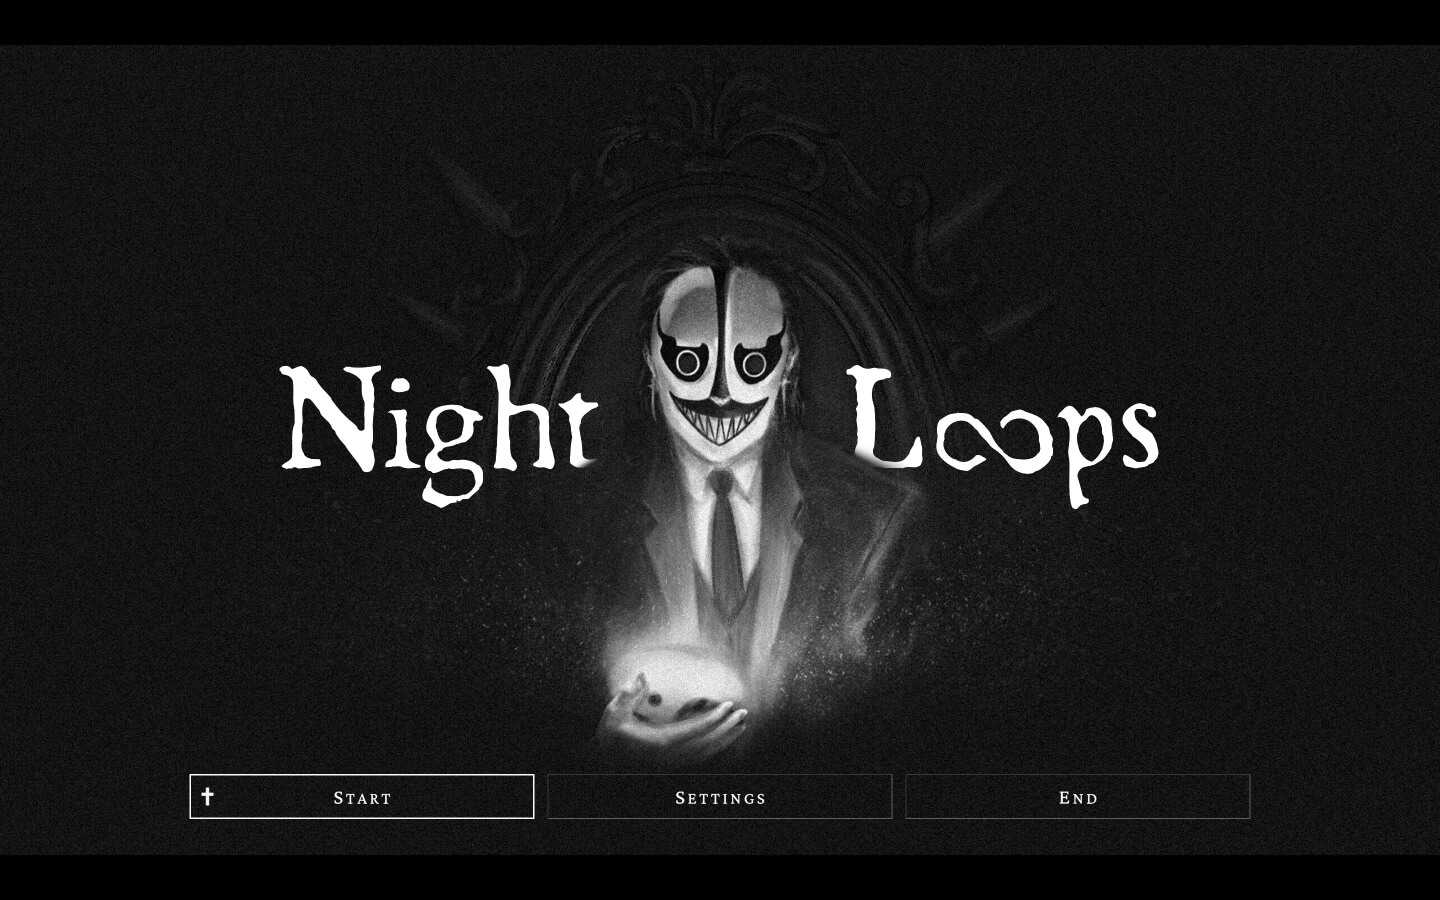 夜间循环 for Mac Night Loops v1.0.2 英文原生版 苹果电脑